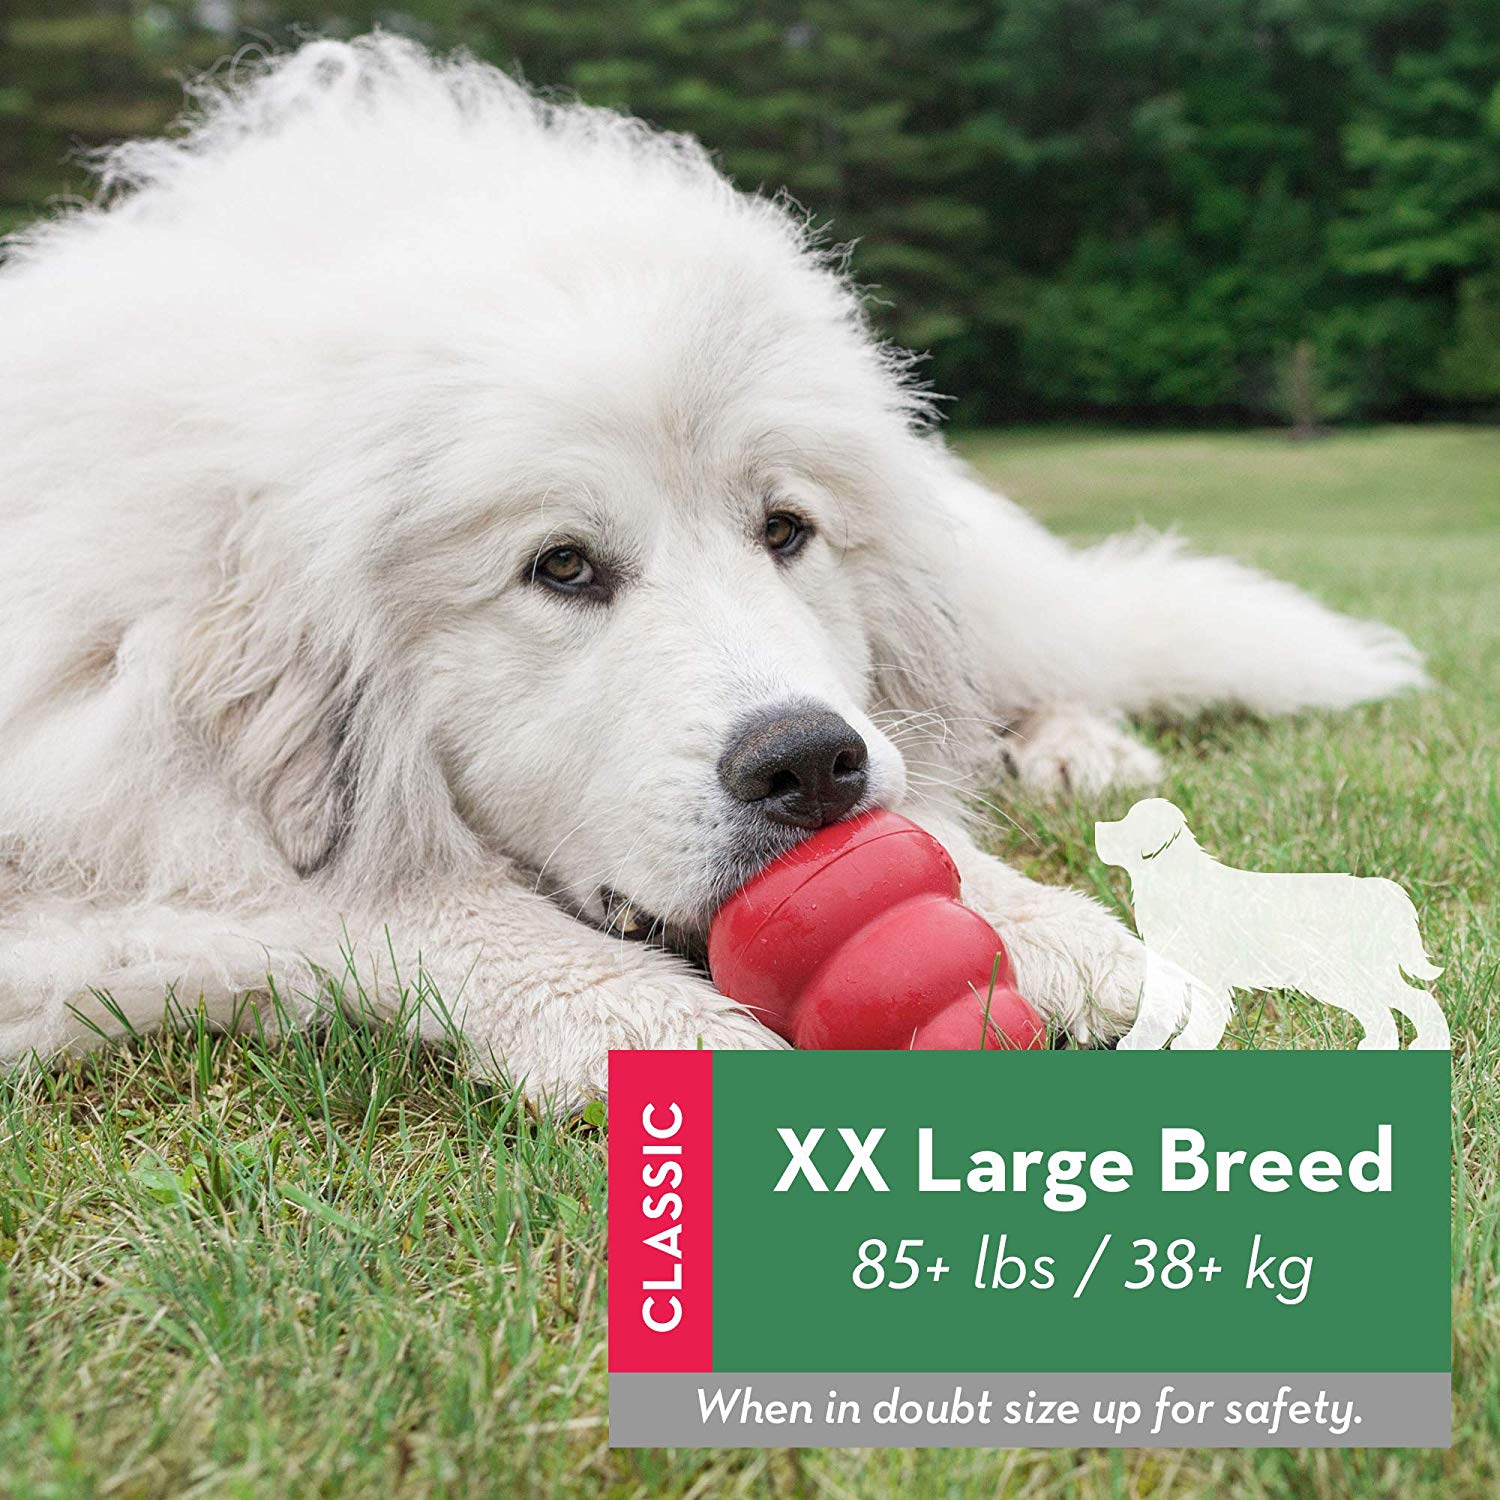 How To Get Your Xiasi Dog To Stop Digging